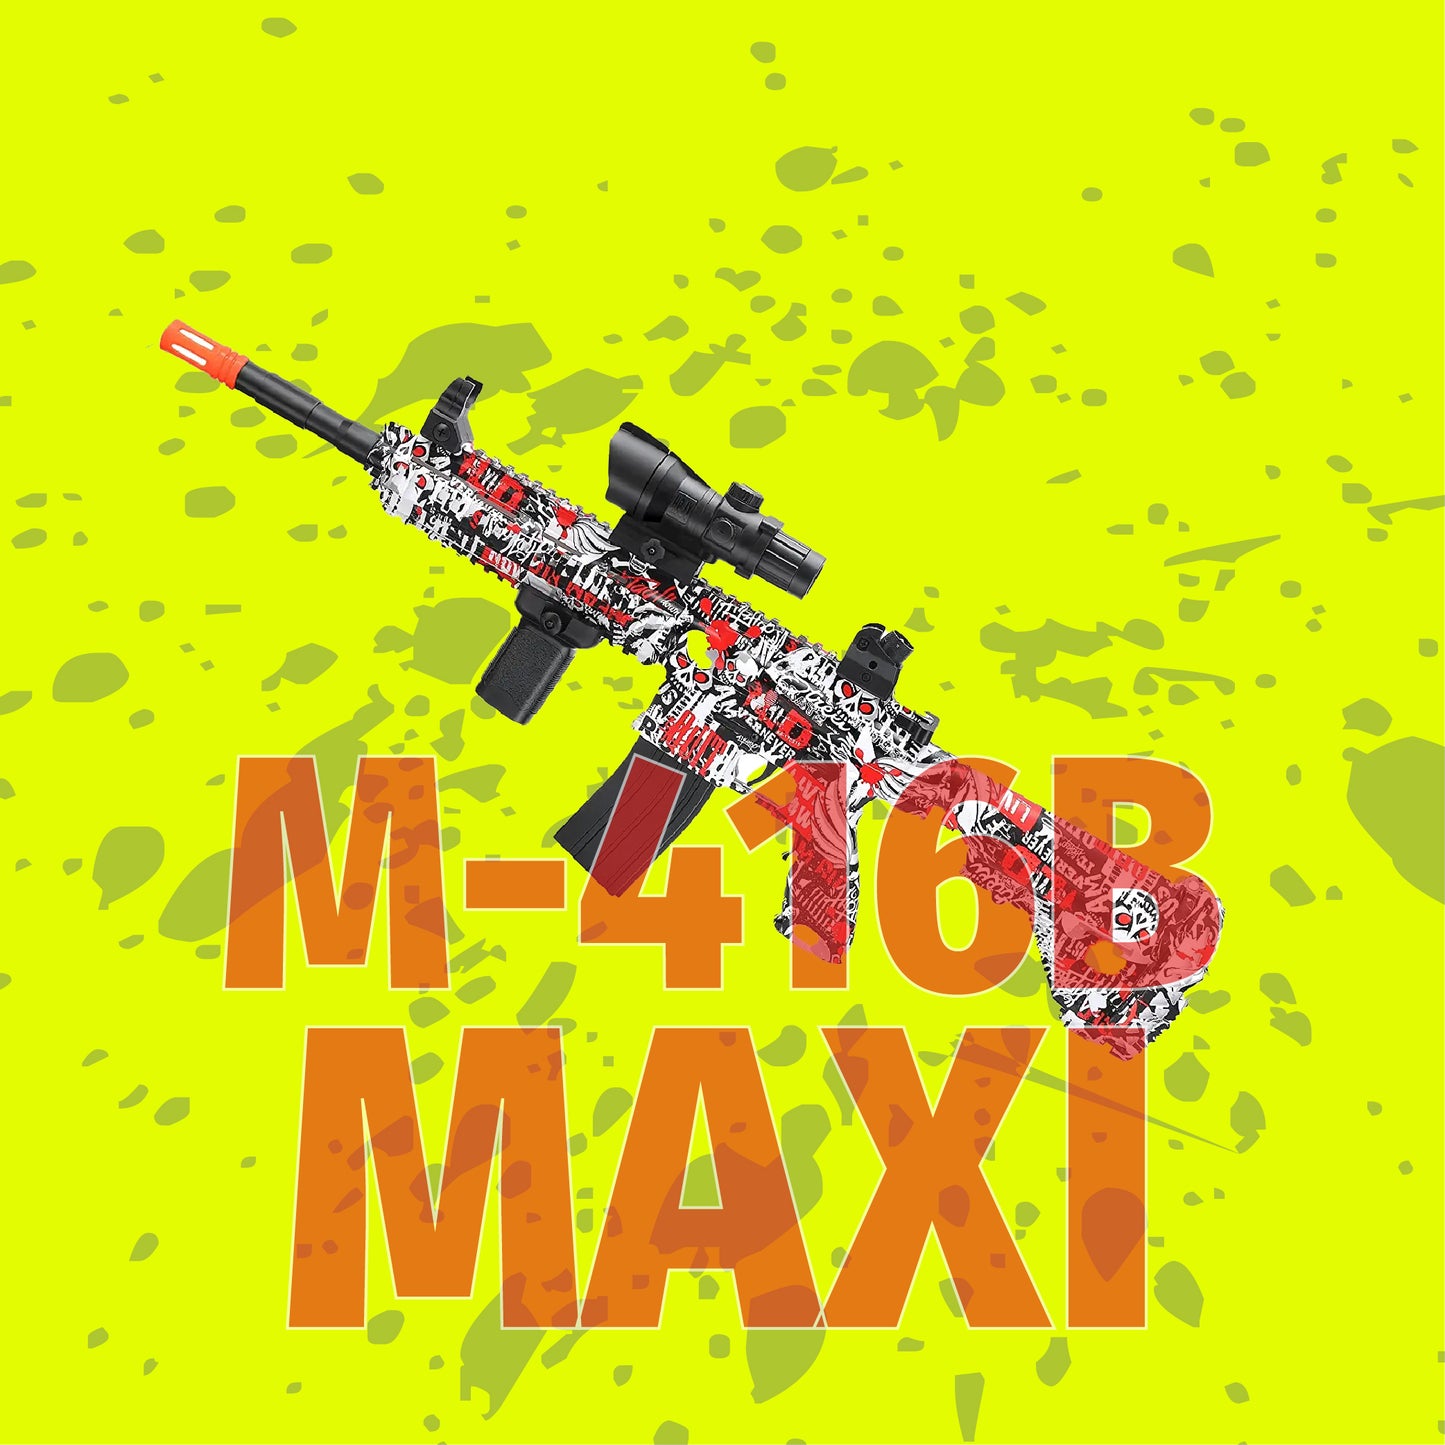 M416 MAXI WARRIOR